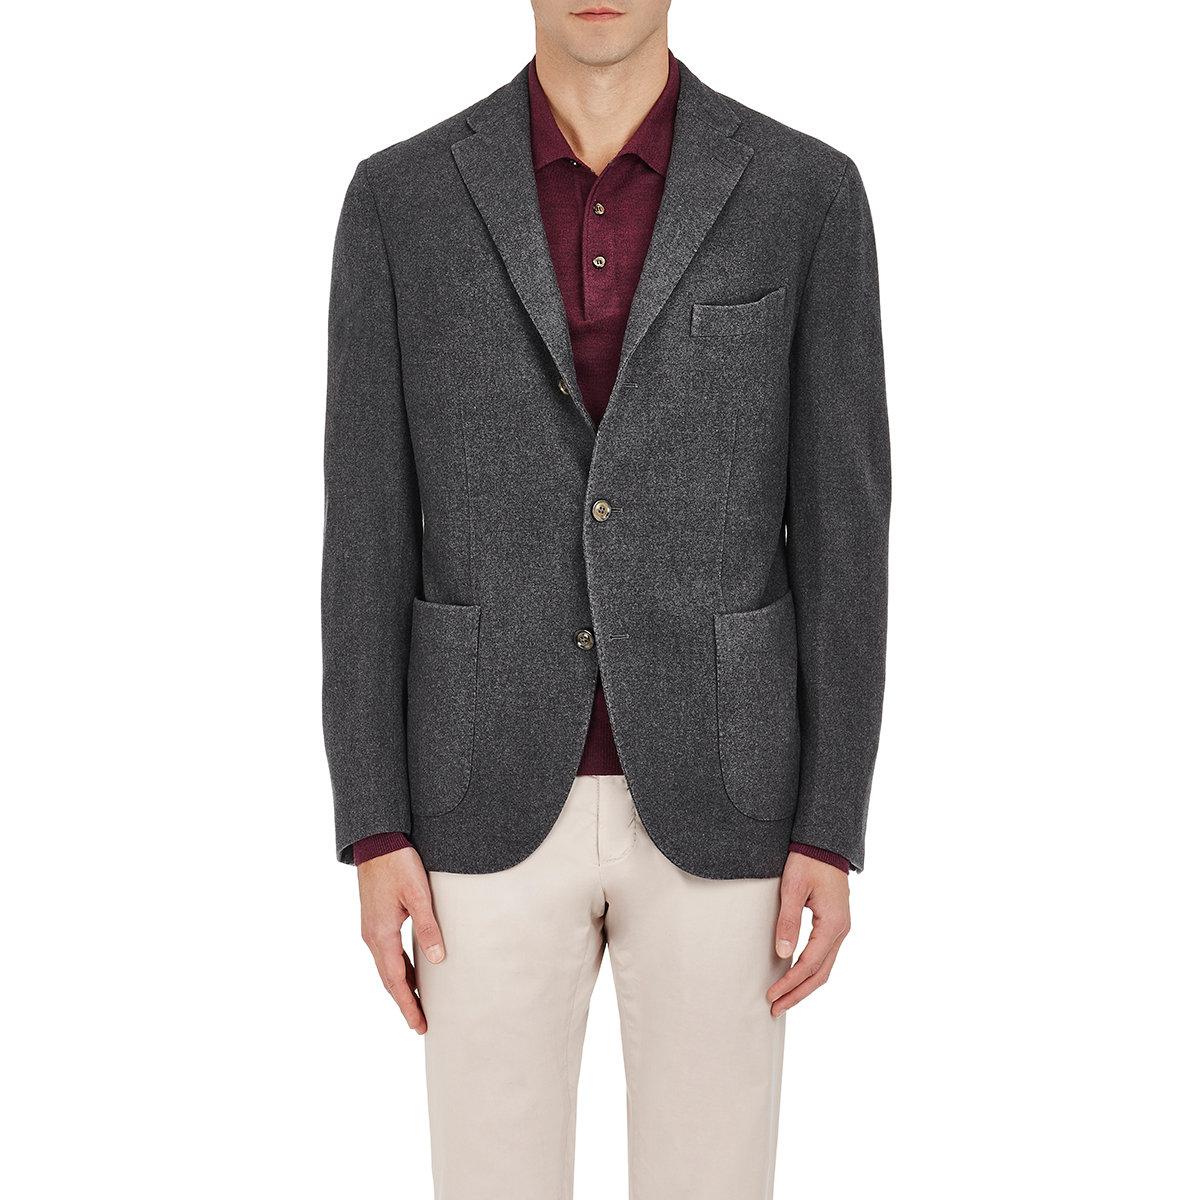 Lyst - Boglioli k Jacket Wool Three in Gray for Men